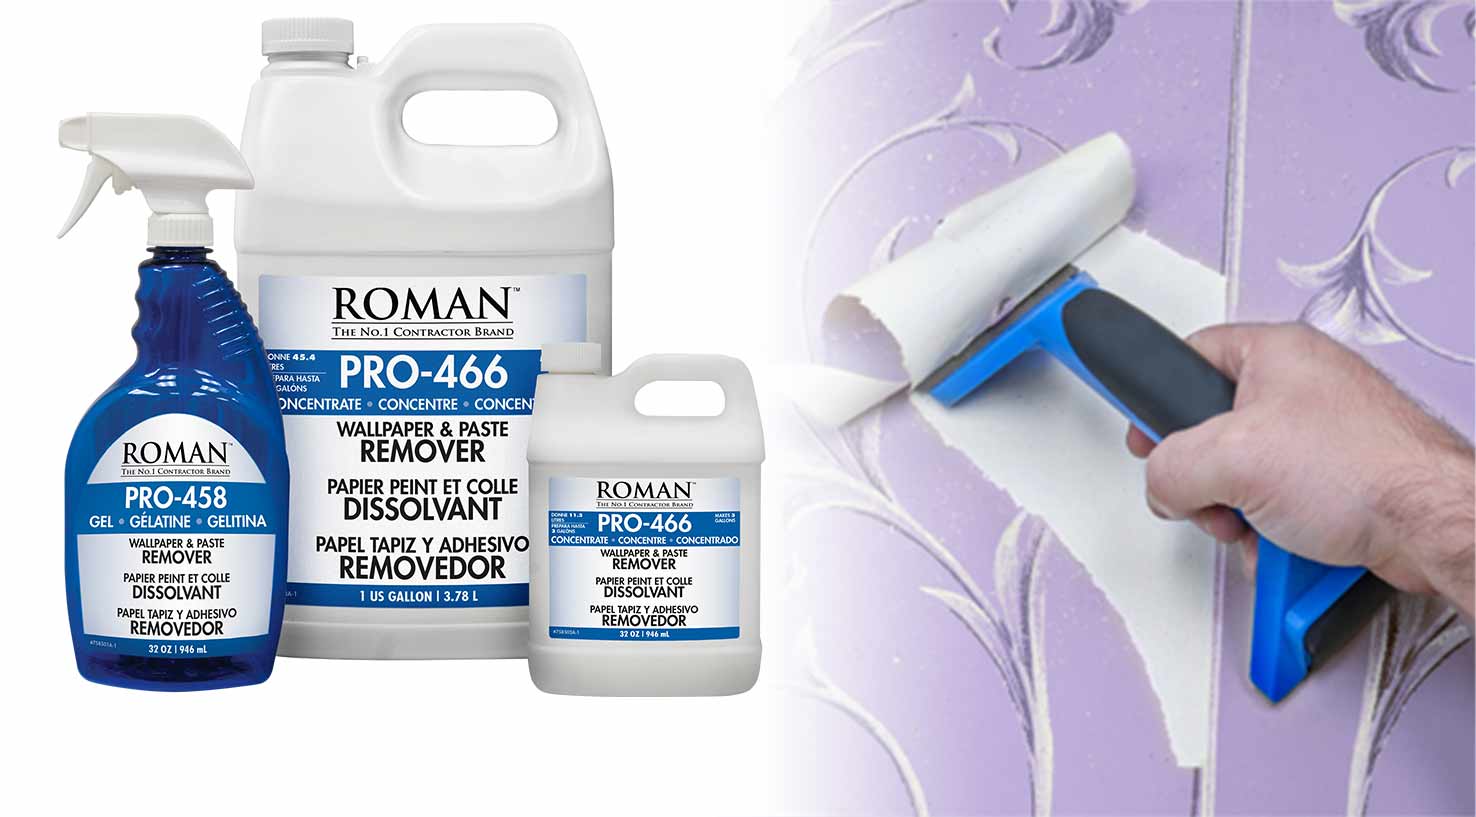 Roman PRO-458 Wallpaper and Paste Remover Gel Spray